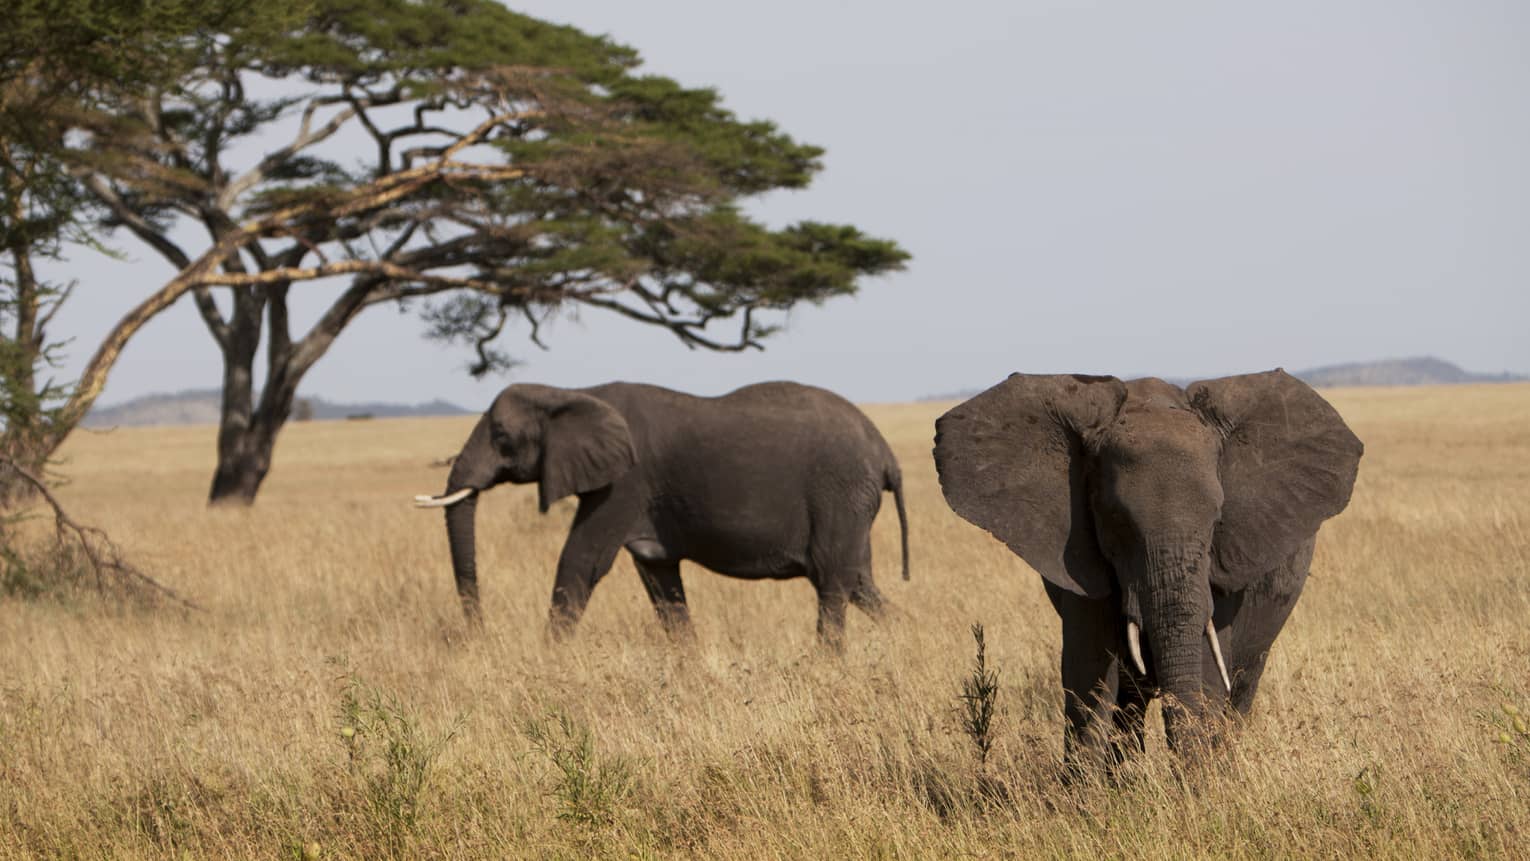 Two juvenile elephants roam the savanna